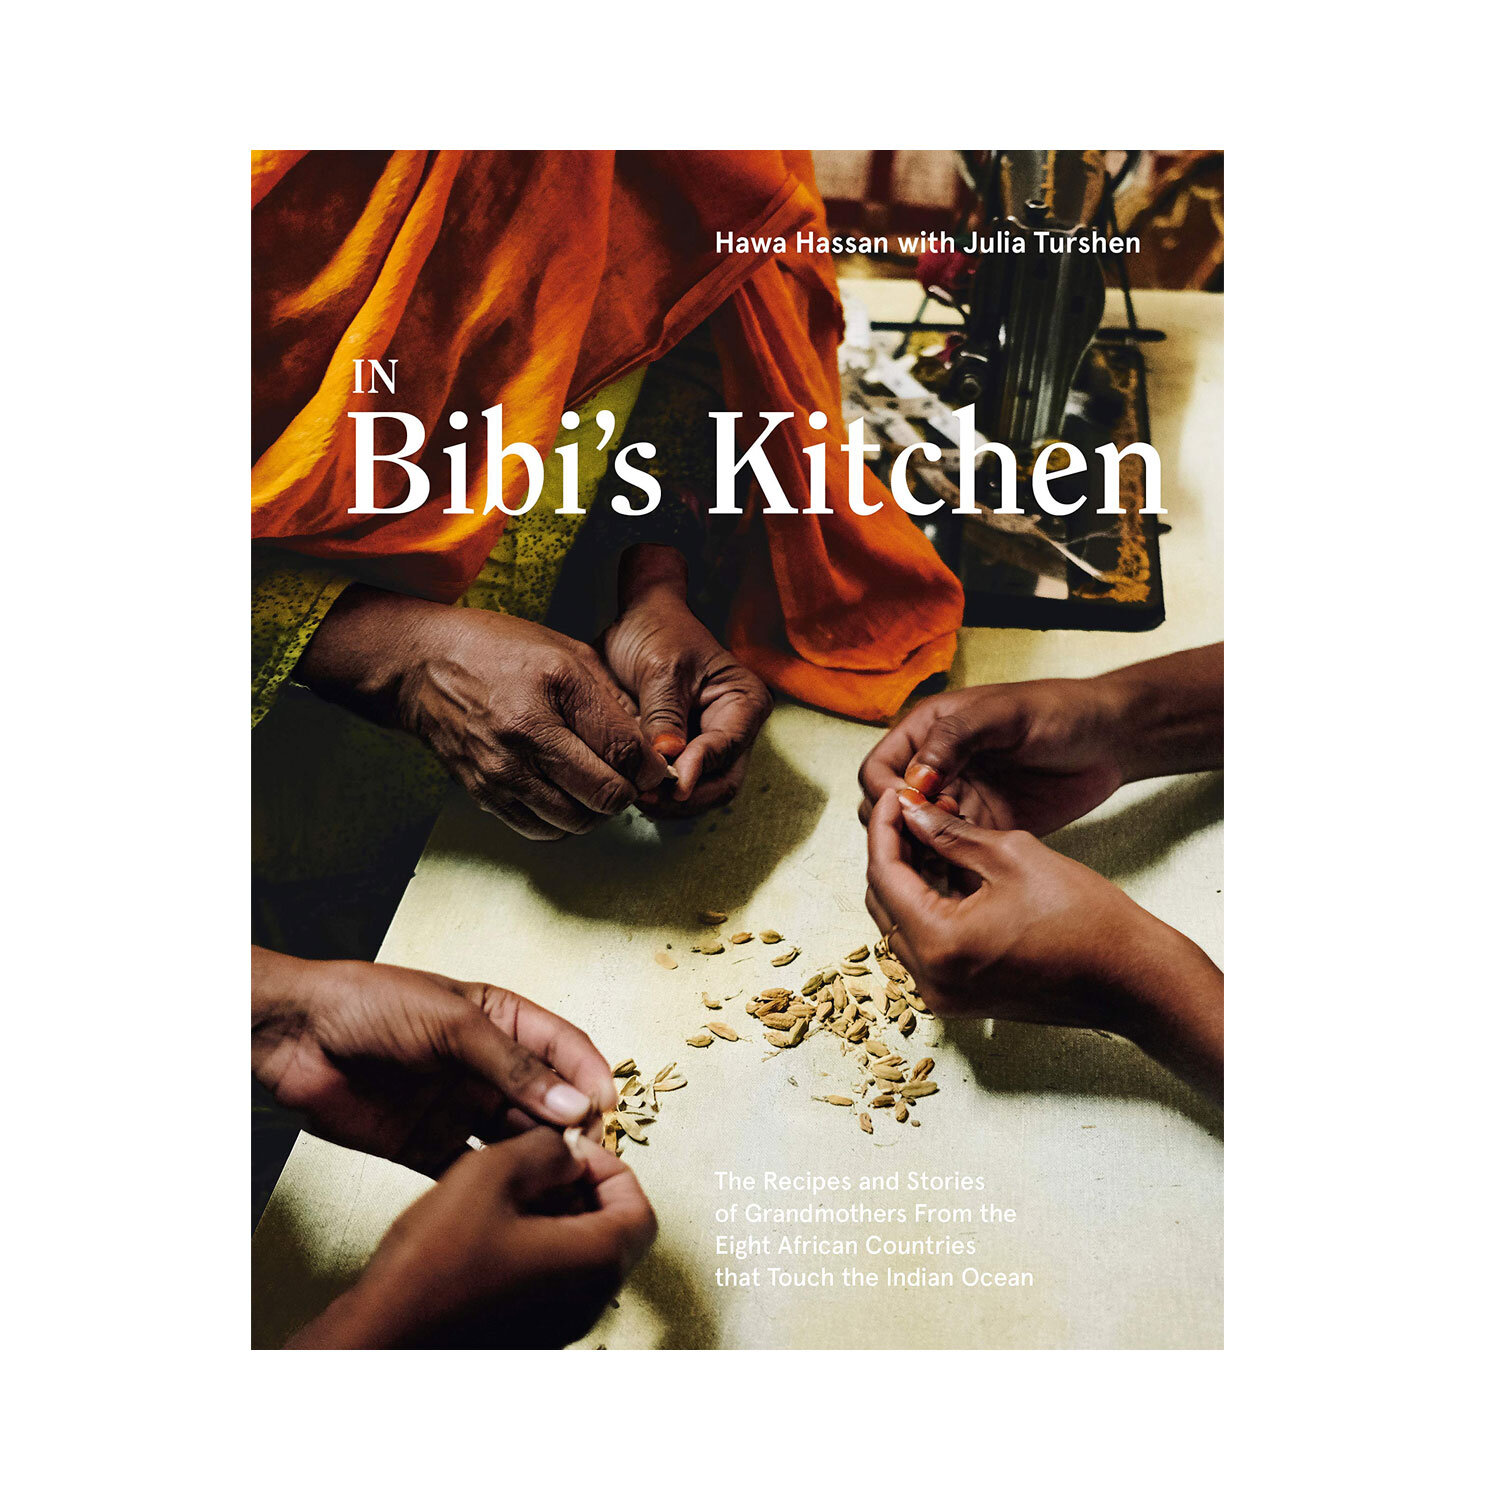 In Bibi’s Kitchen by Hawa Hassan